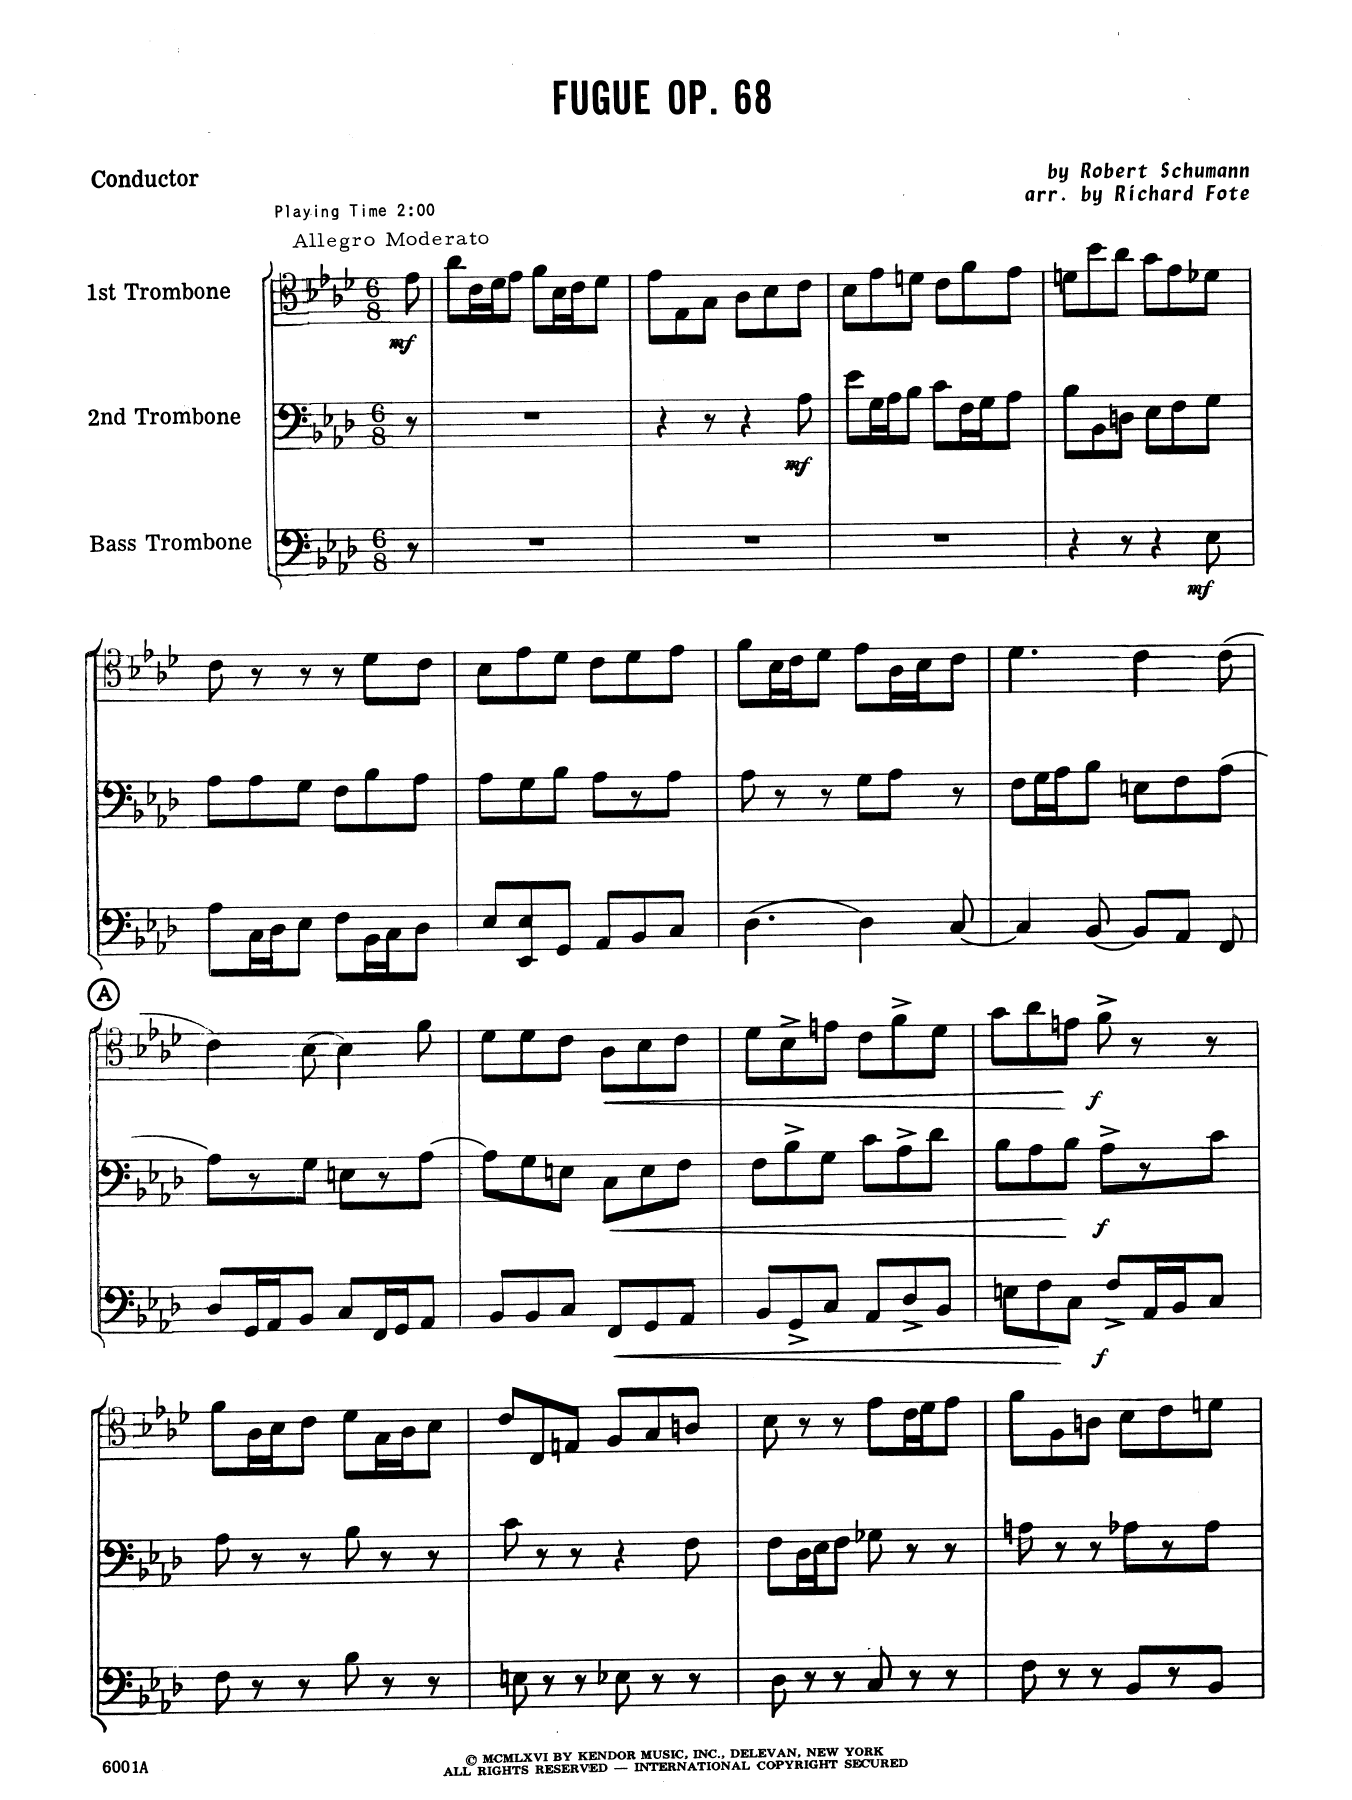 Download Richard Fote Fugue/Opus 68 - Full Score Sheet Music